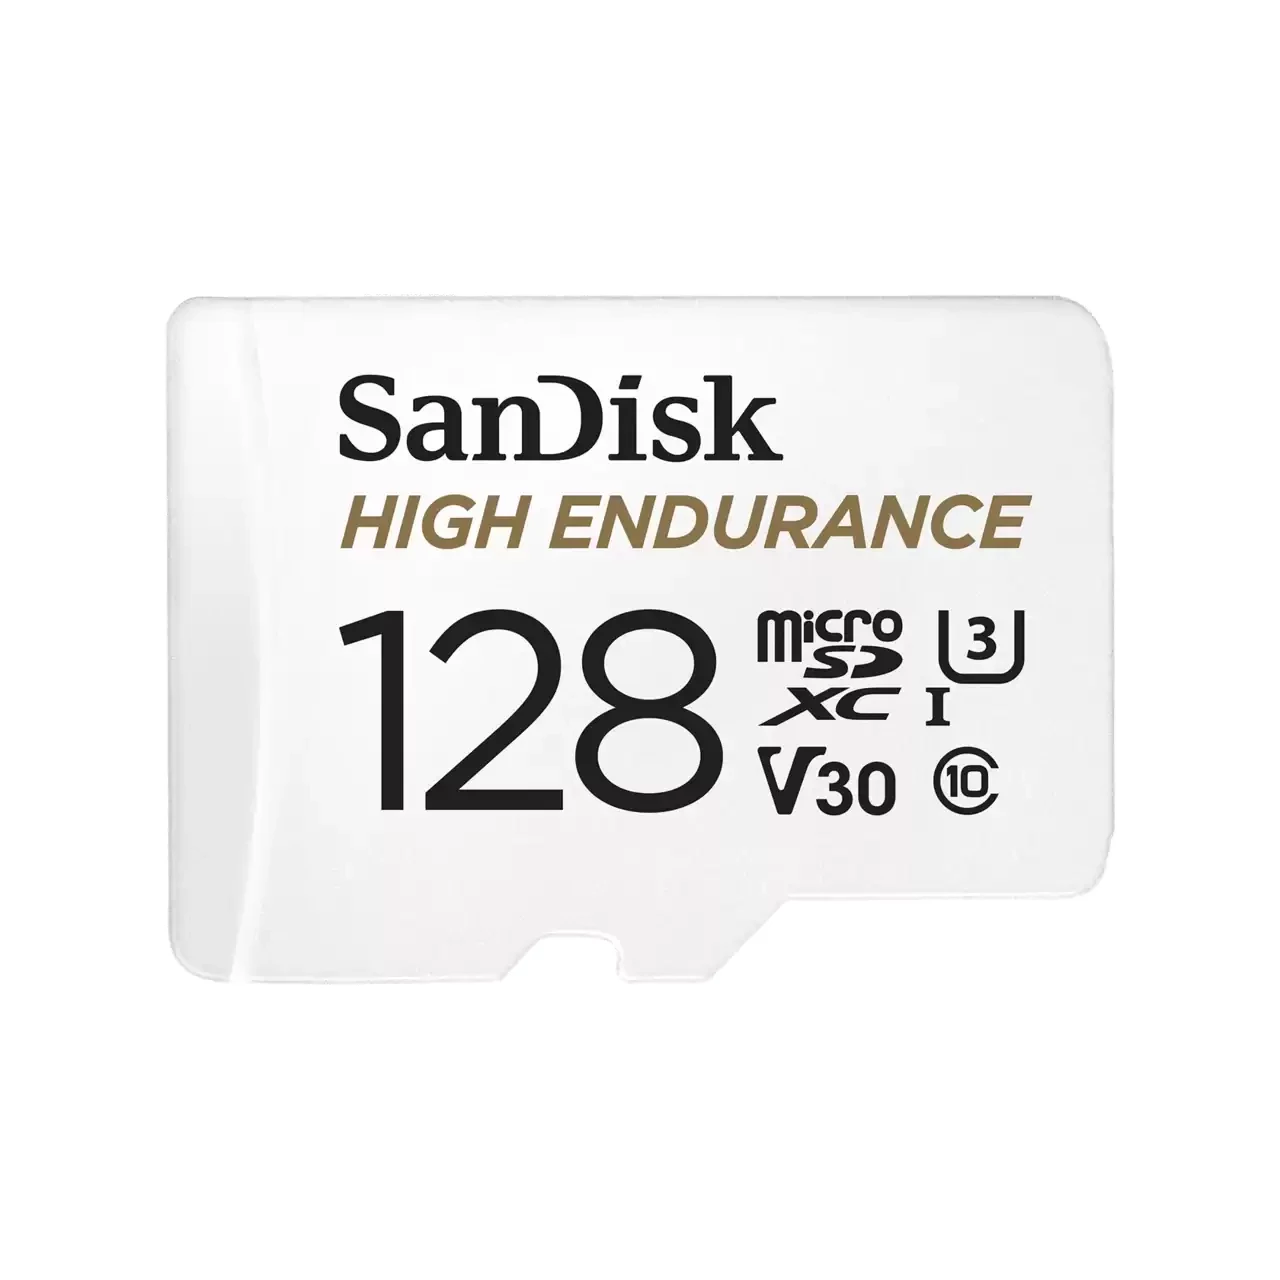 Sandisk High Endurance 128Gb MicroSDXC UHS-I Memory Card